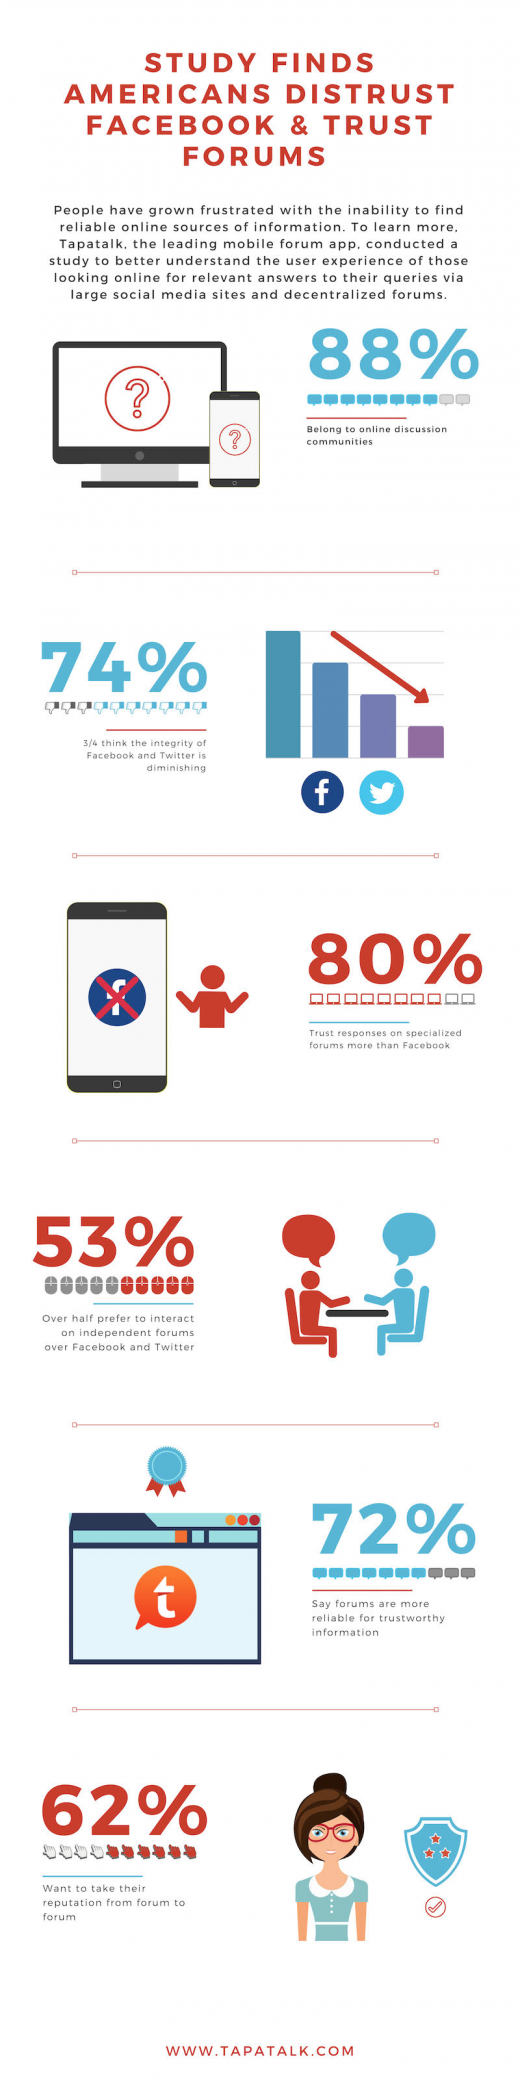 Study Shows Americans Prefer Online Forums Over Mainstream Social Media